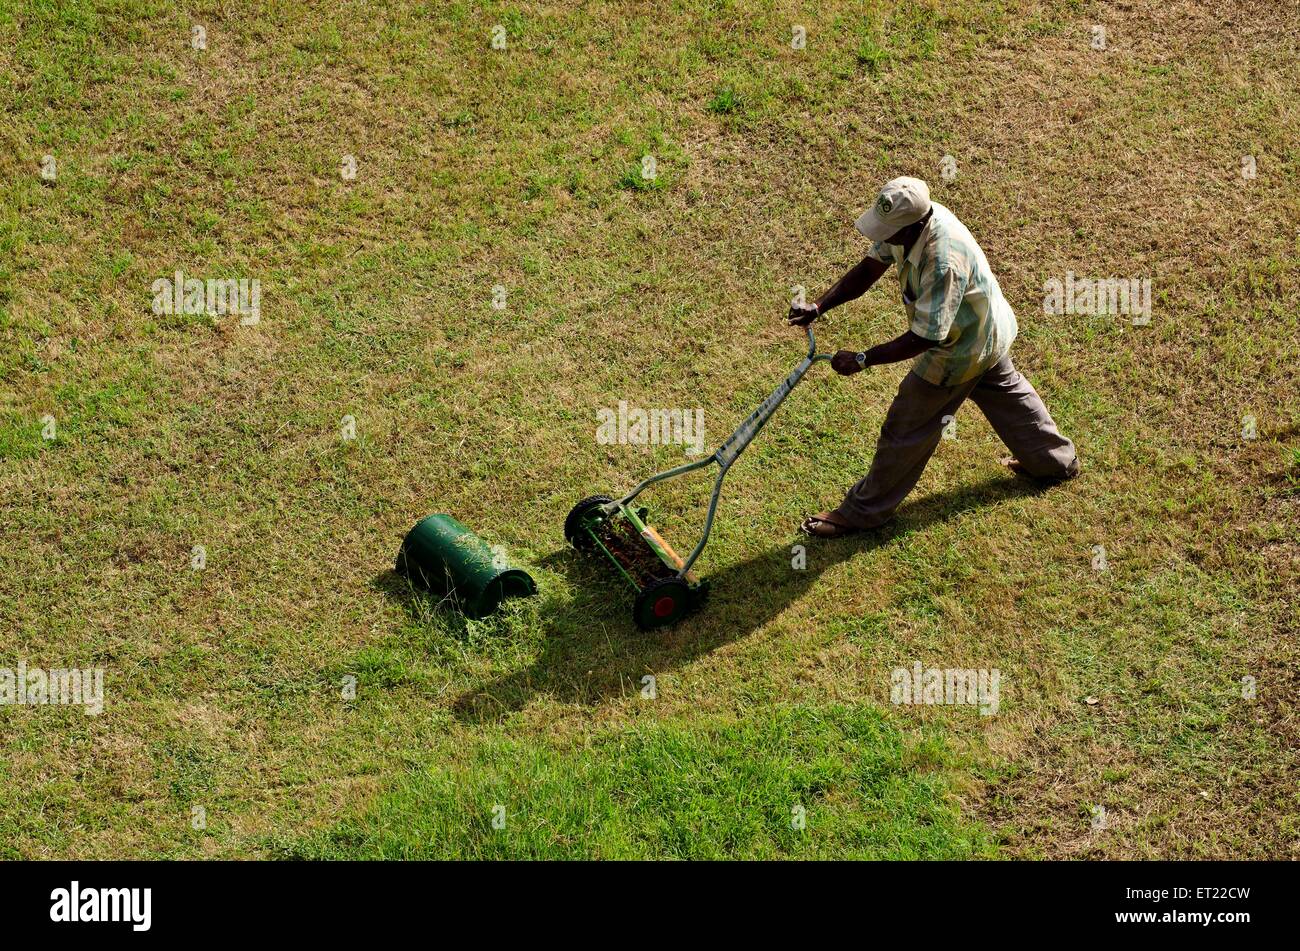 gardner moving lawn grass with mower machine Stock Photo